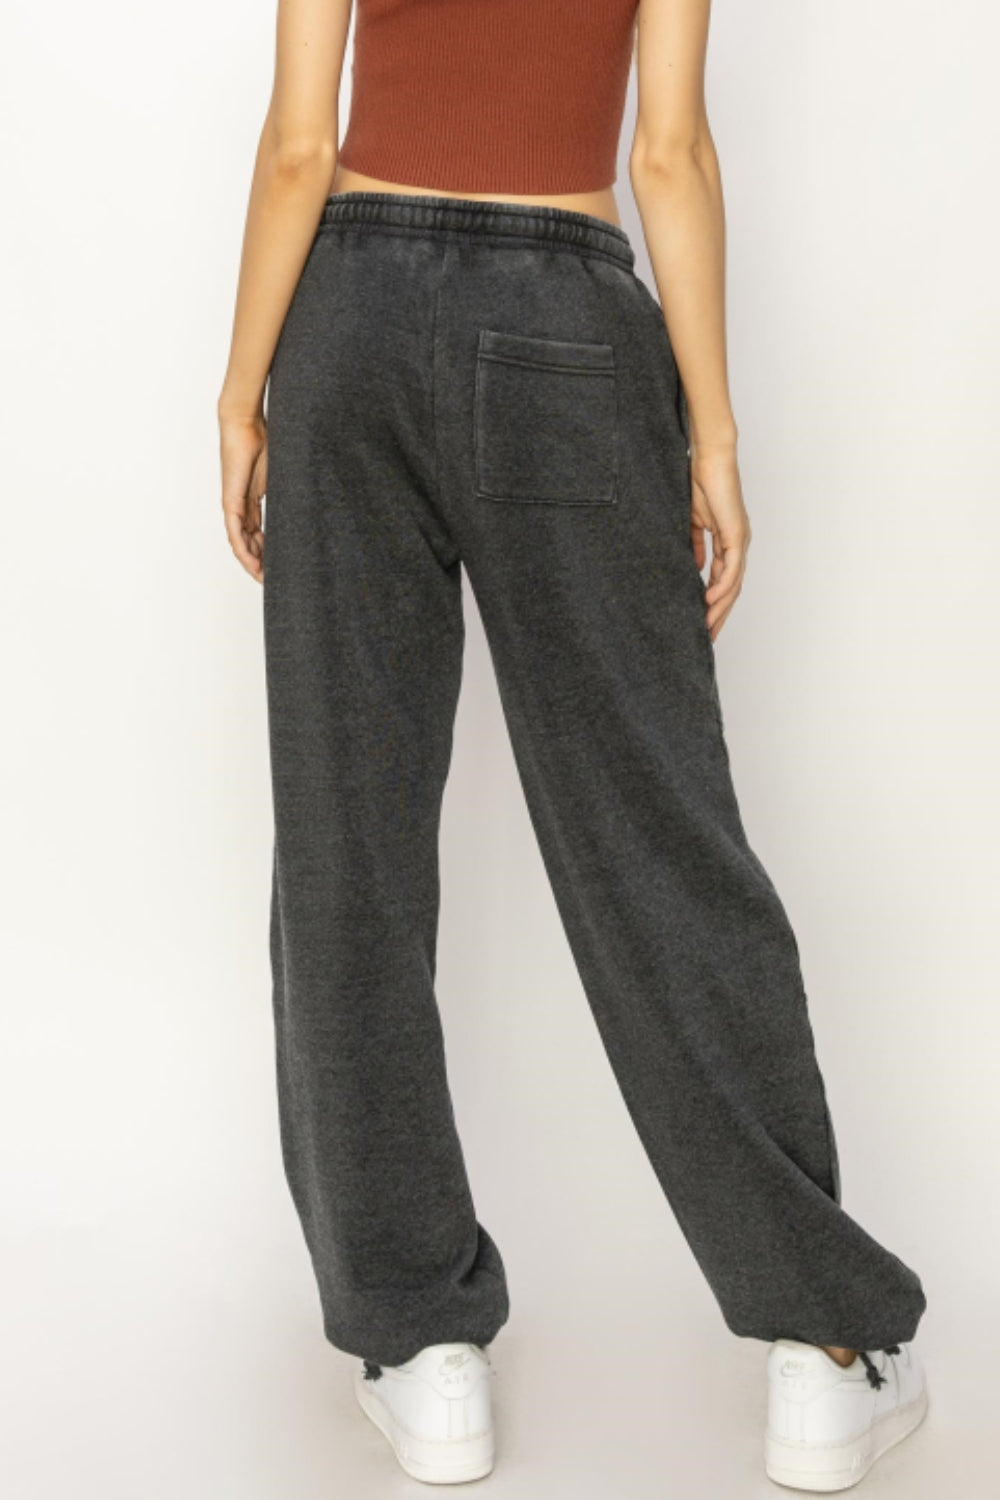 Women's Black Stitch Drawstring Sweatpants with Pockets